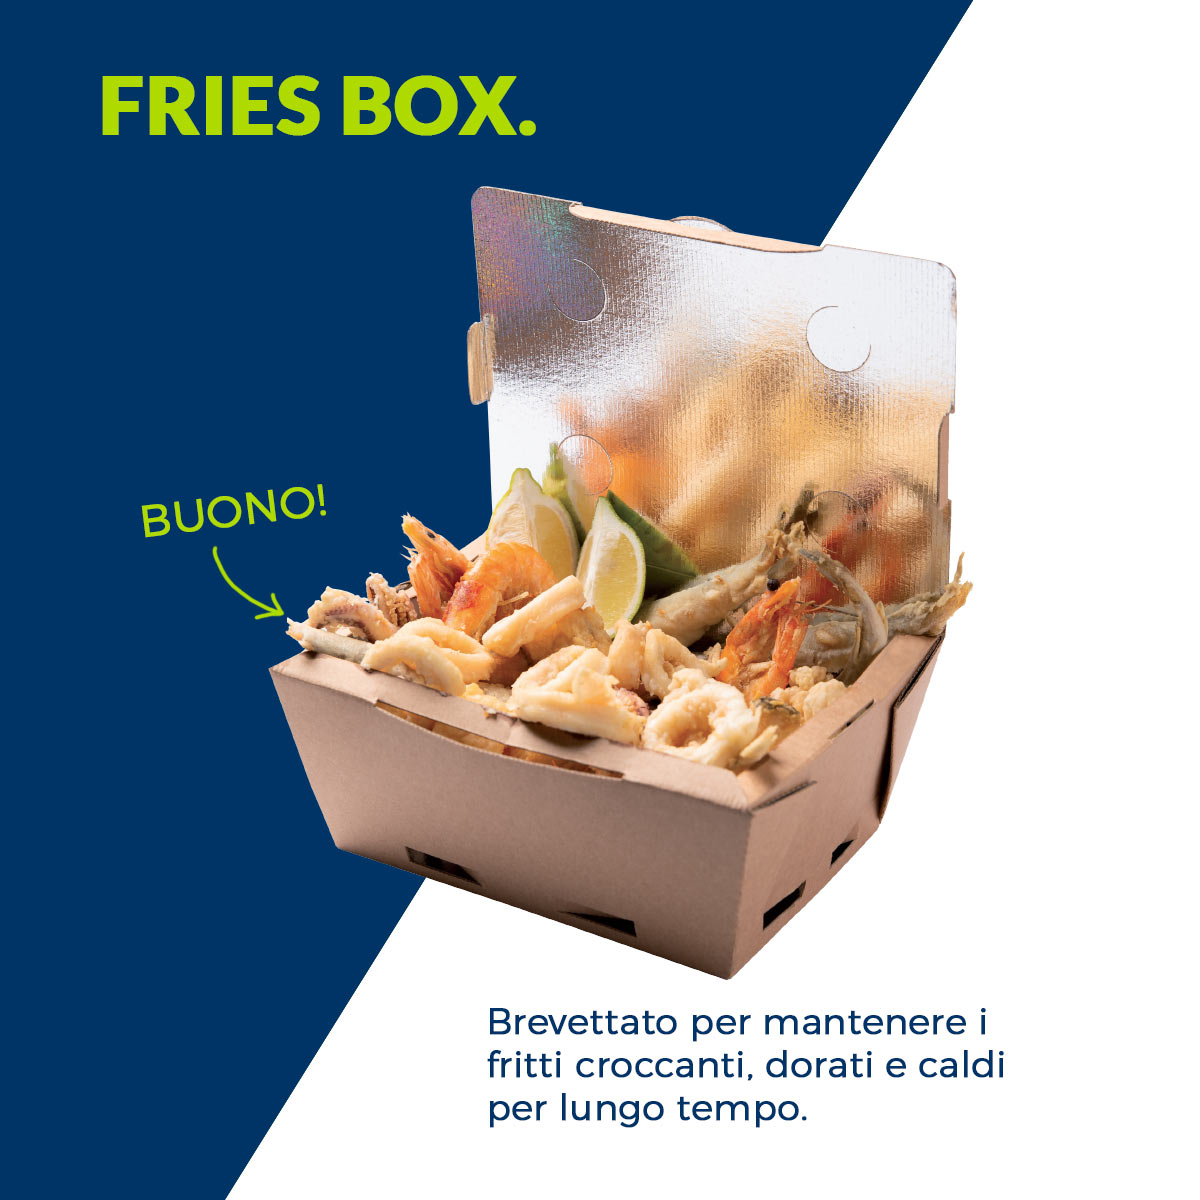 friesbox-mobile